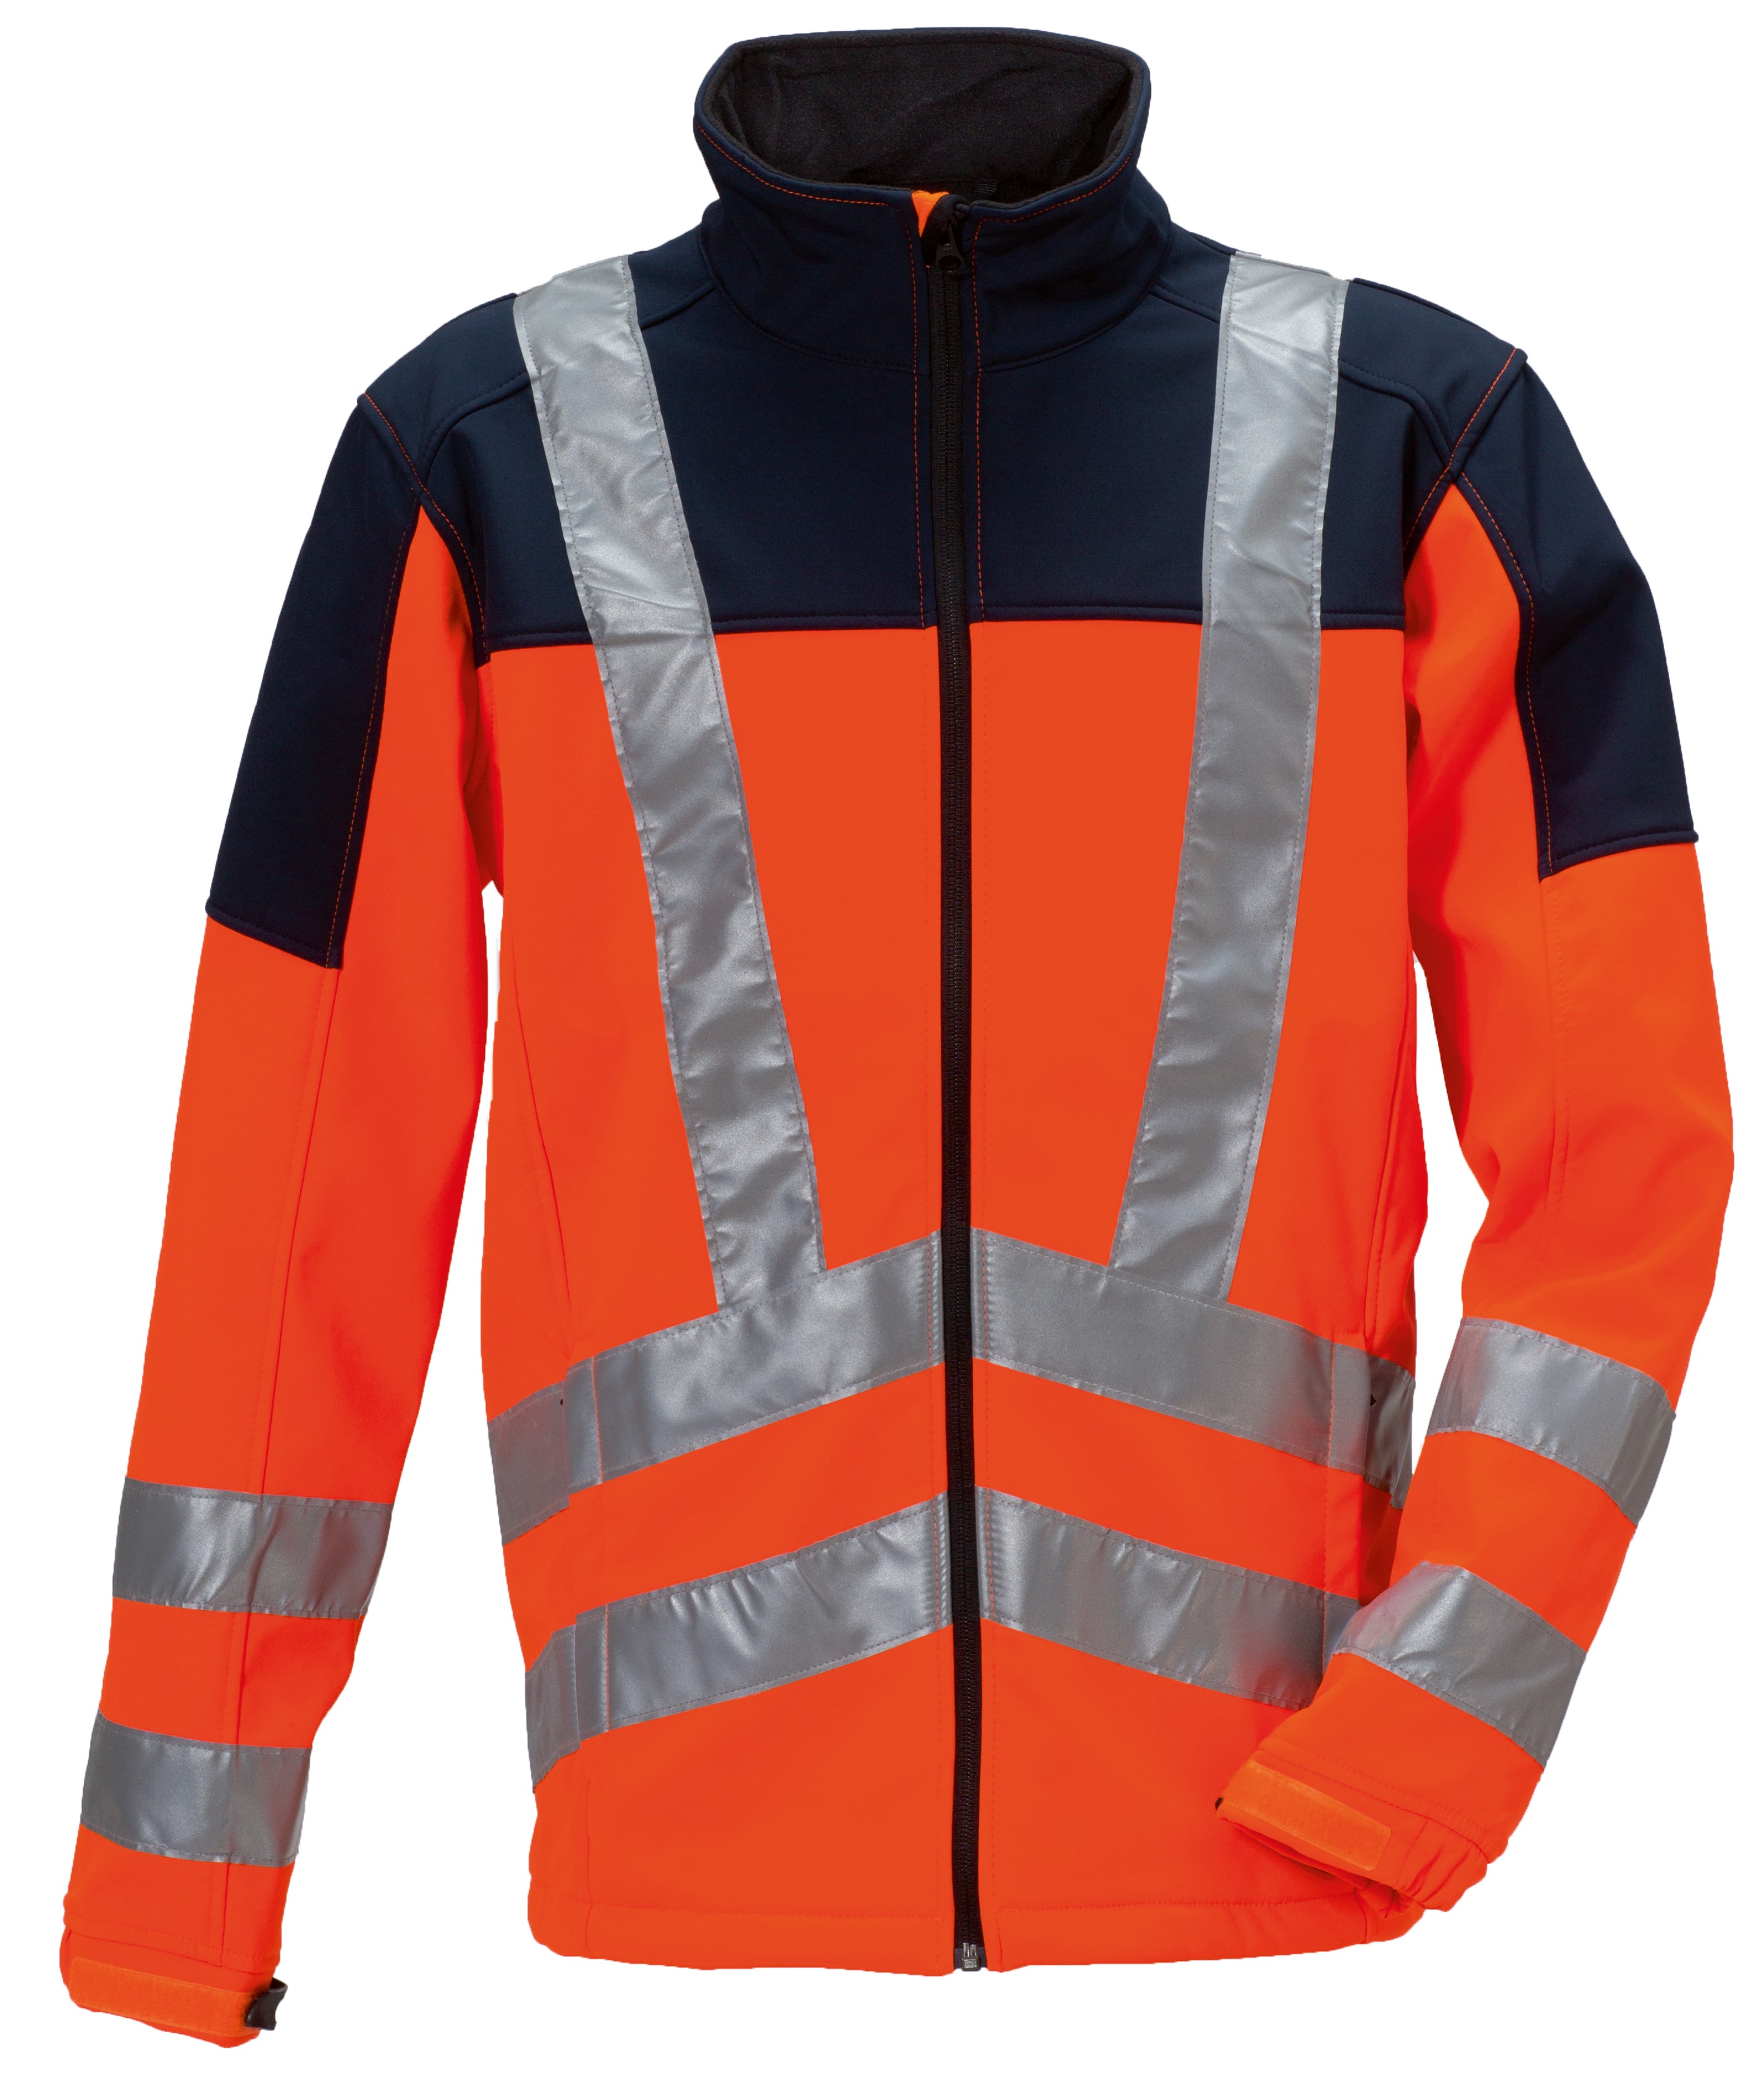 ROFA SJ Softshelljacke Arbeitsjacke Warnkleidung Warnschutz leuchtorange marine ca 310 g